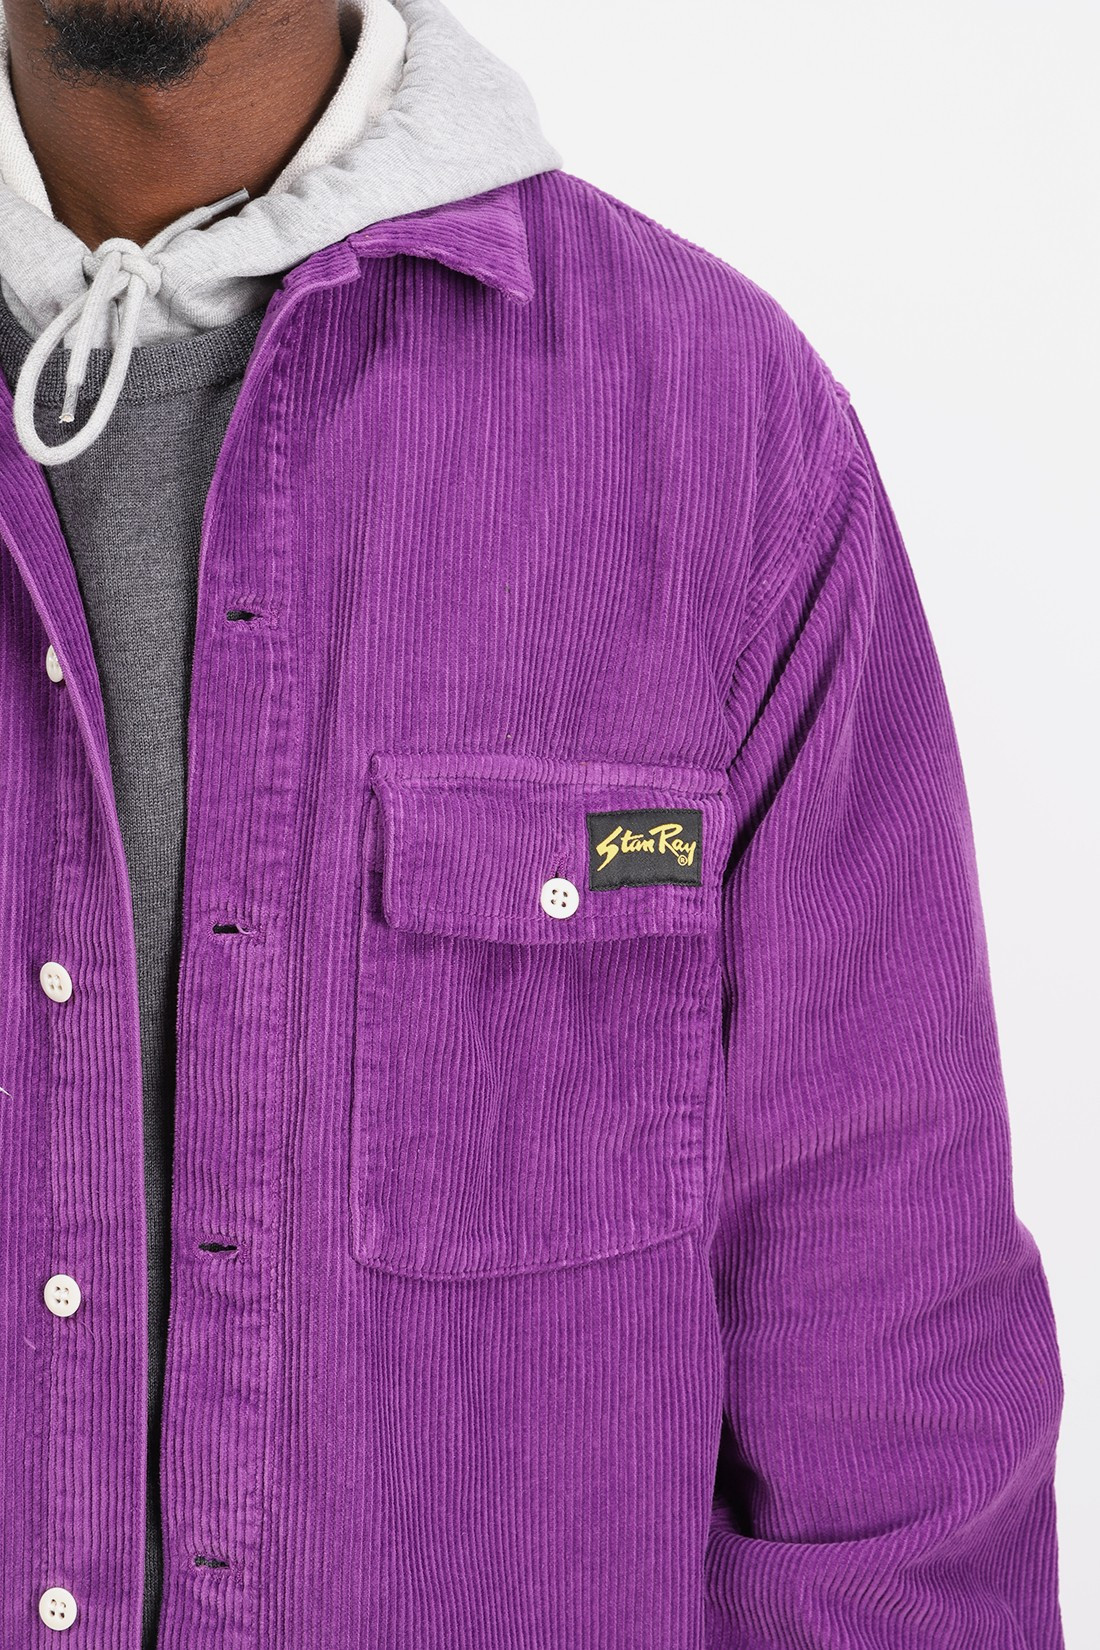 STAN RAY / Cpo shirt Purple cord